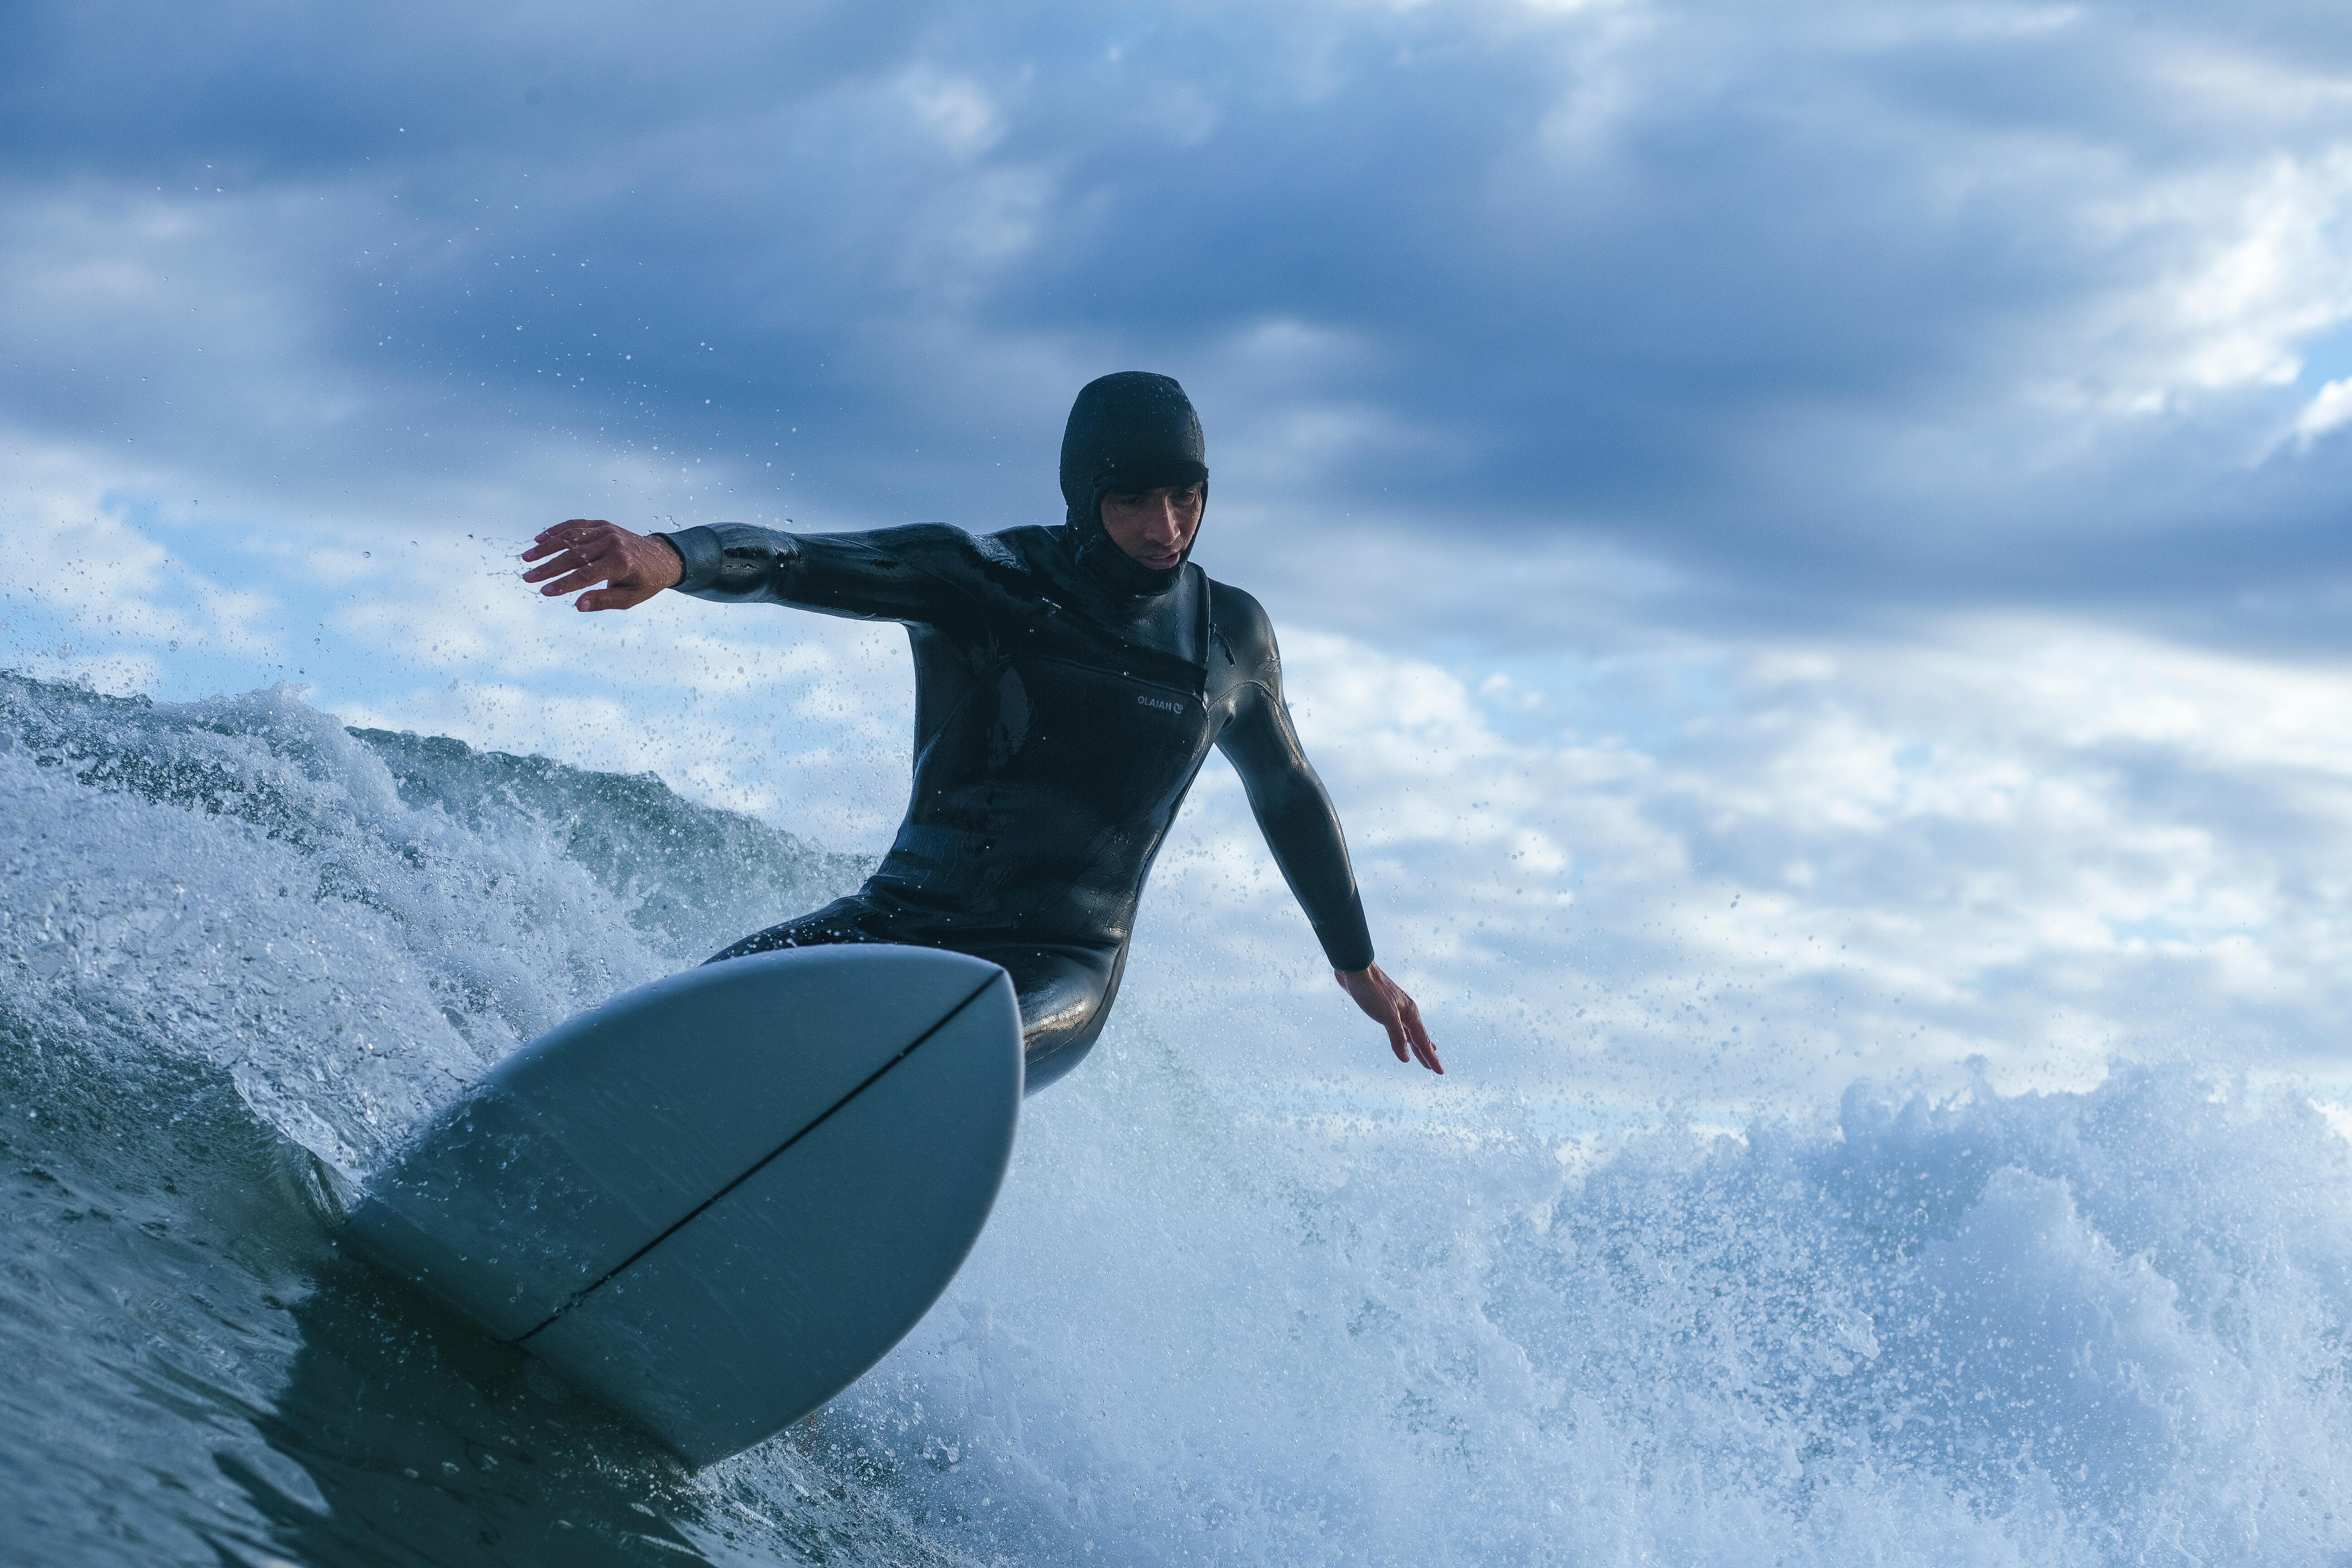 Men’s 5/4 mm Neoprene Surfing Wetsuit - 900 - OLAIAN